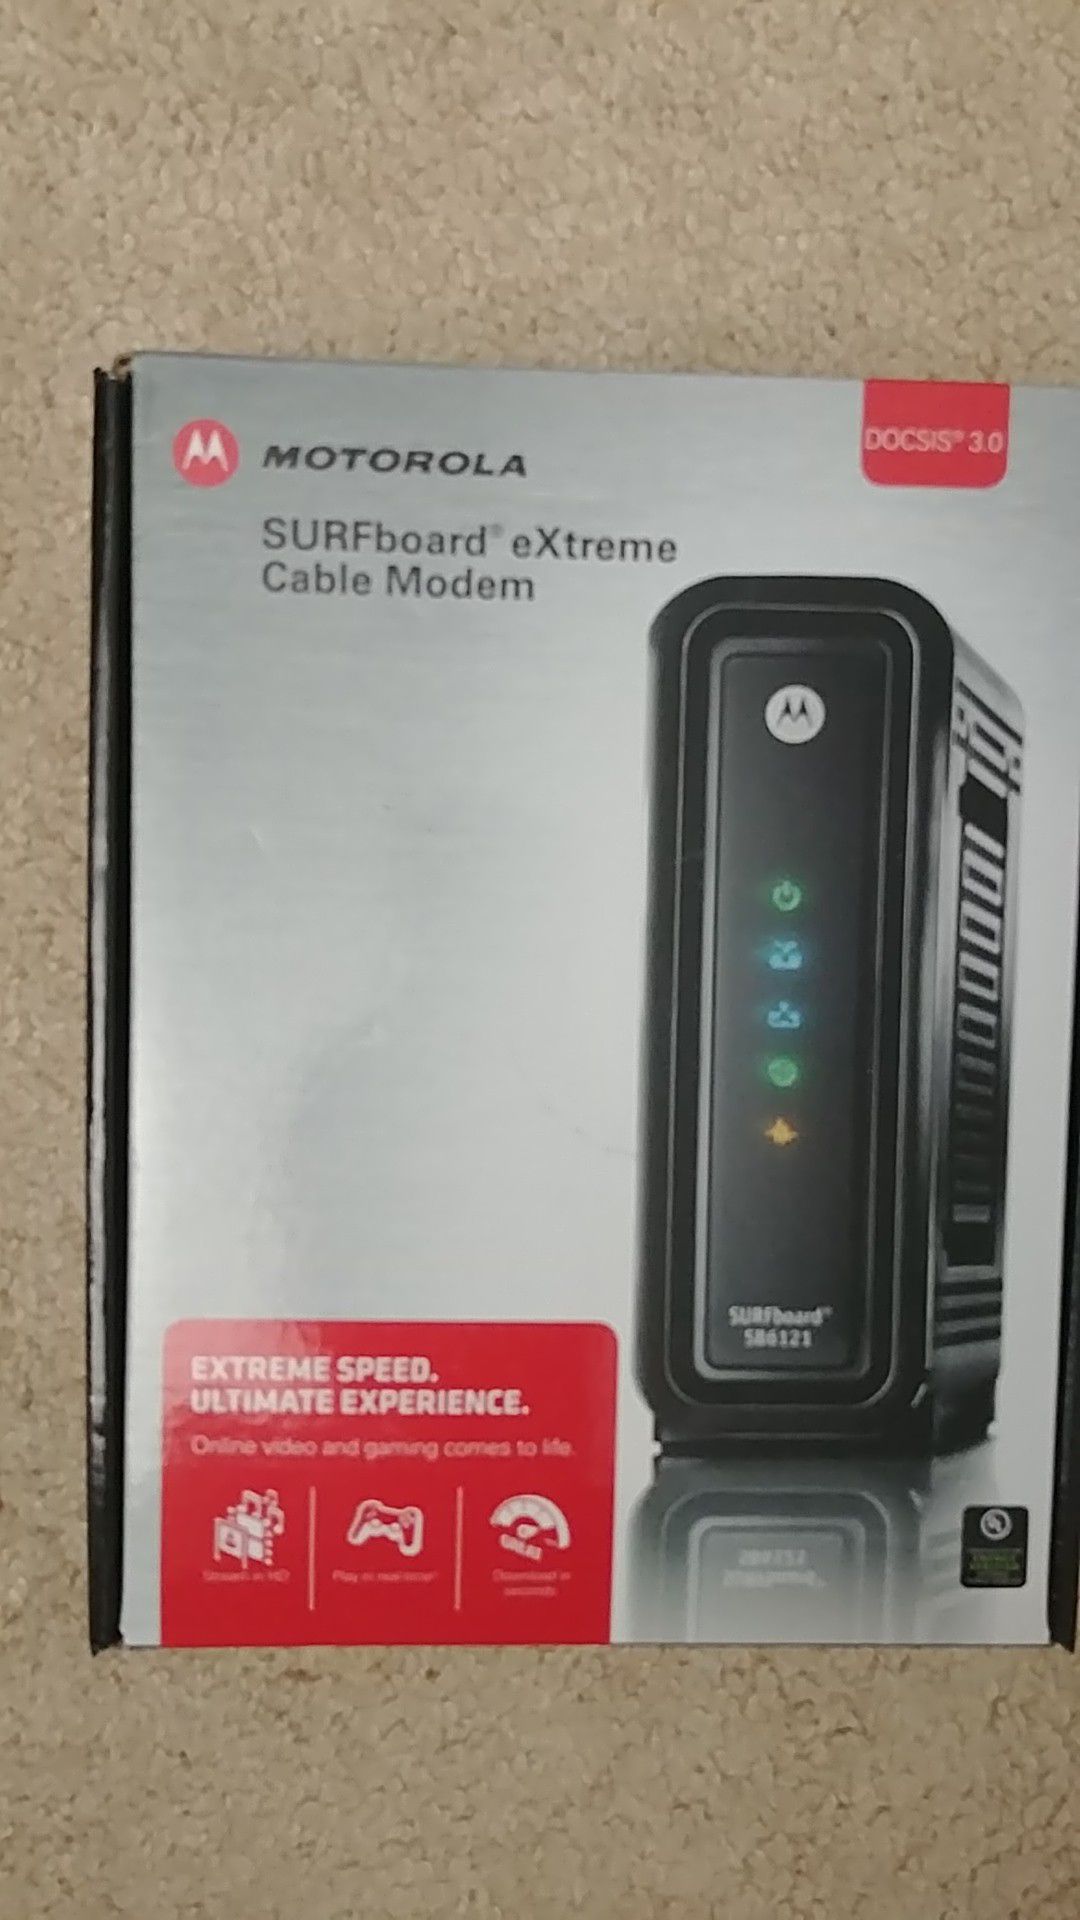 Motorola SURFboard eXtreme docsis 3.0 cable modem